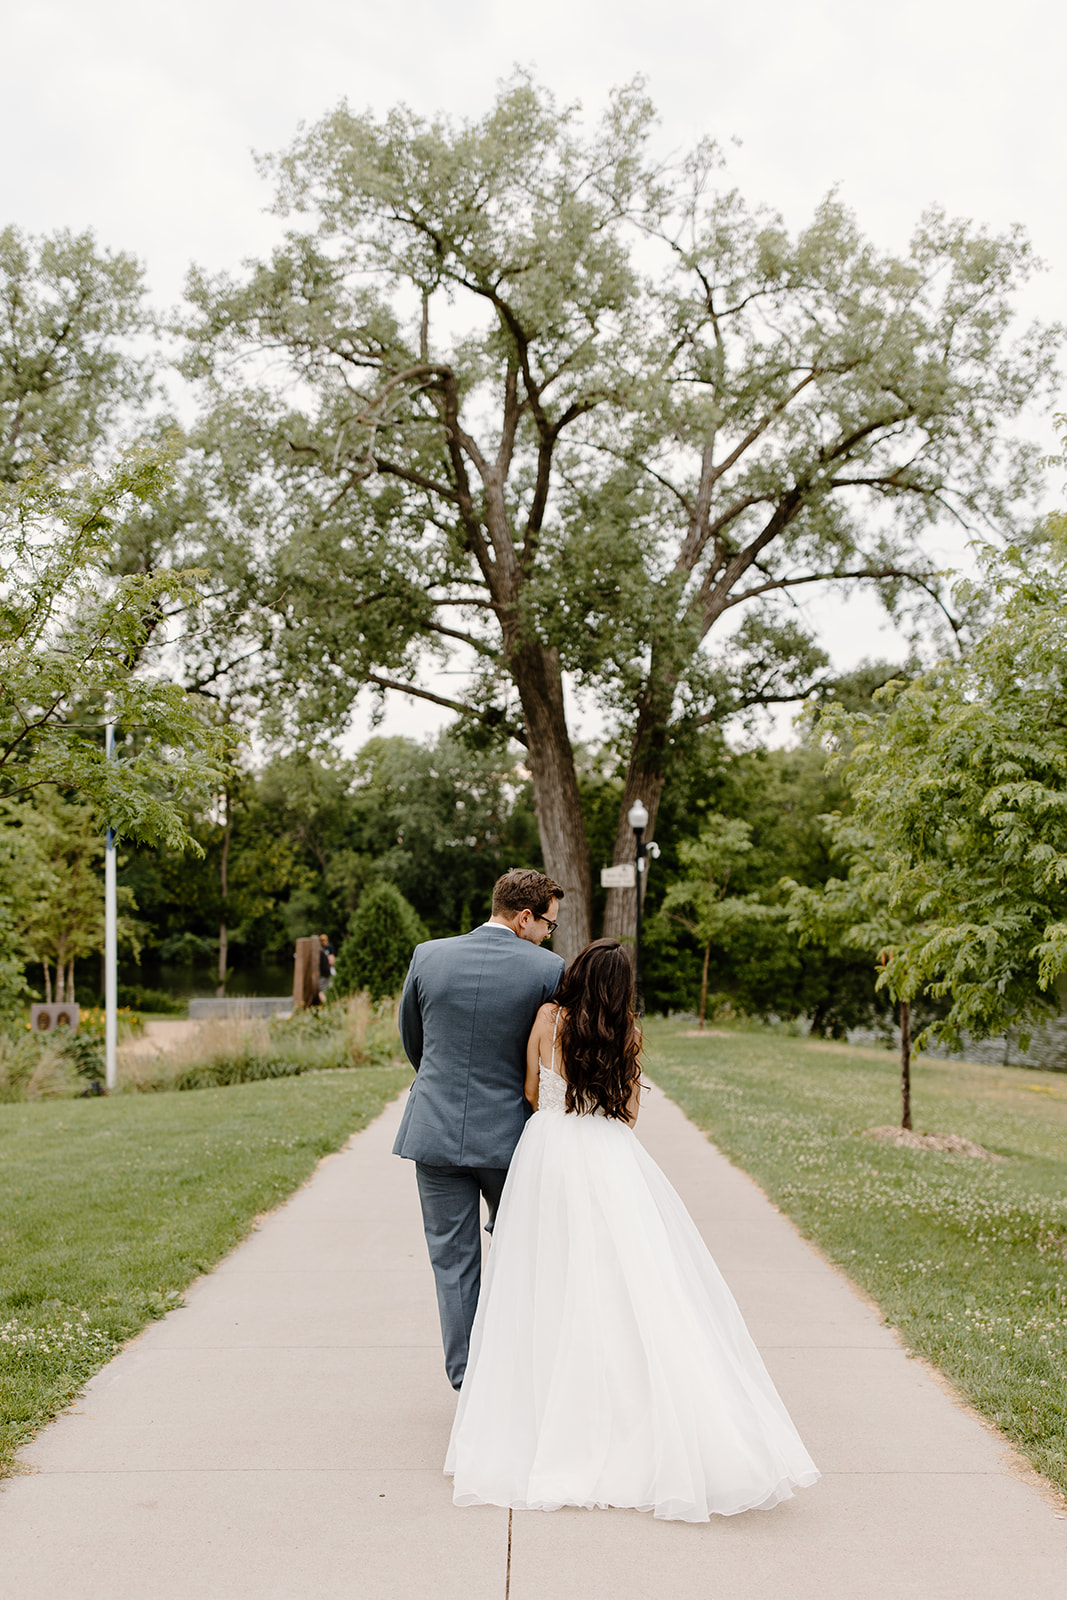 Bride and groom walk away towards a tree